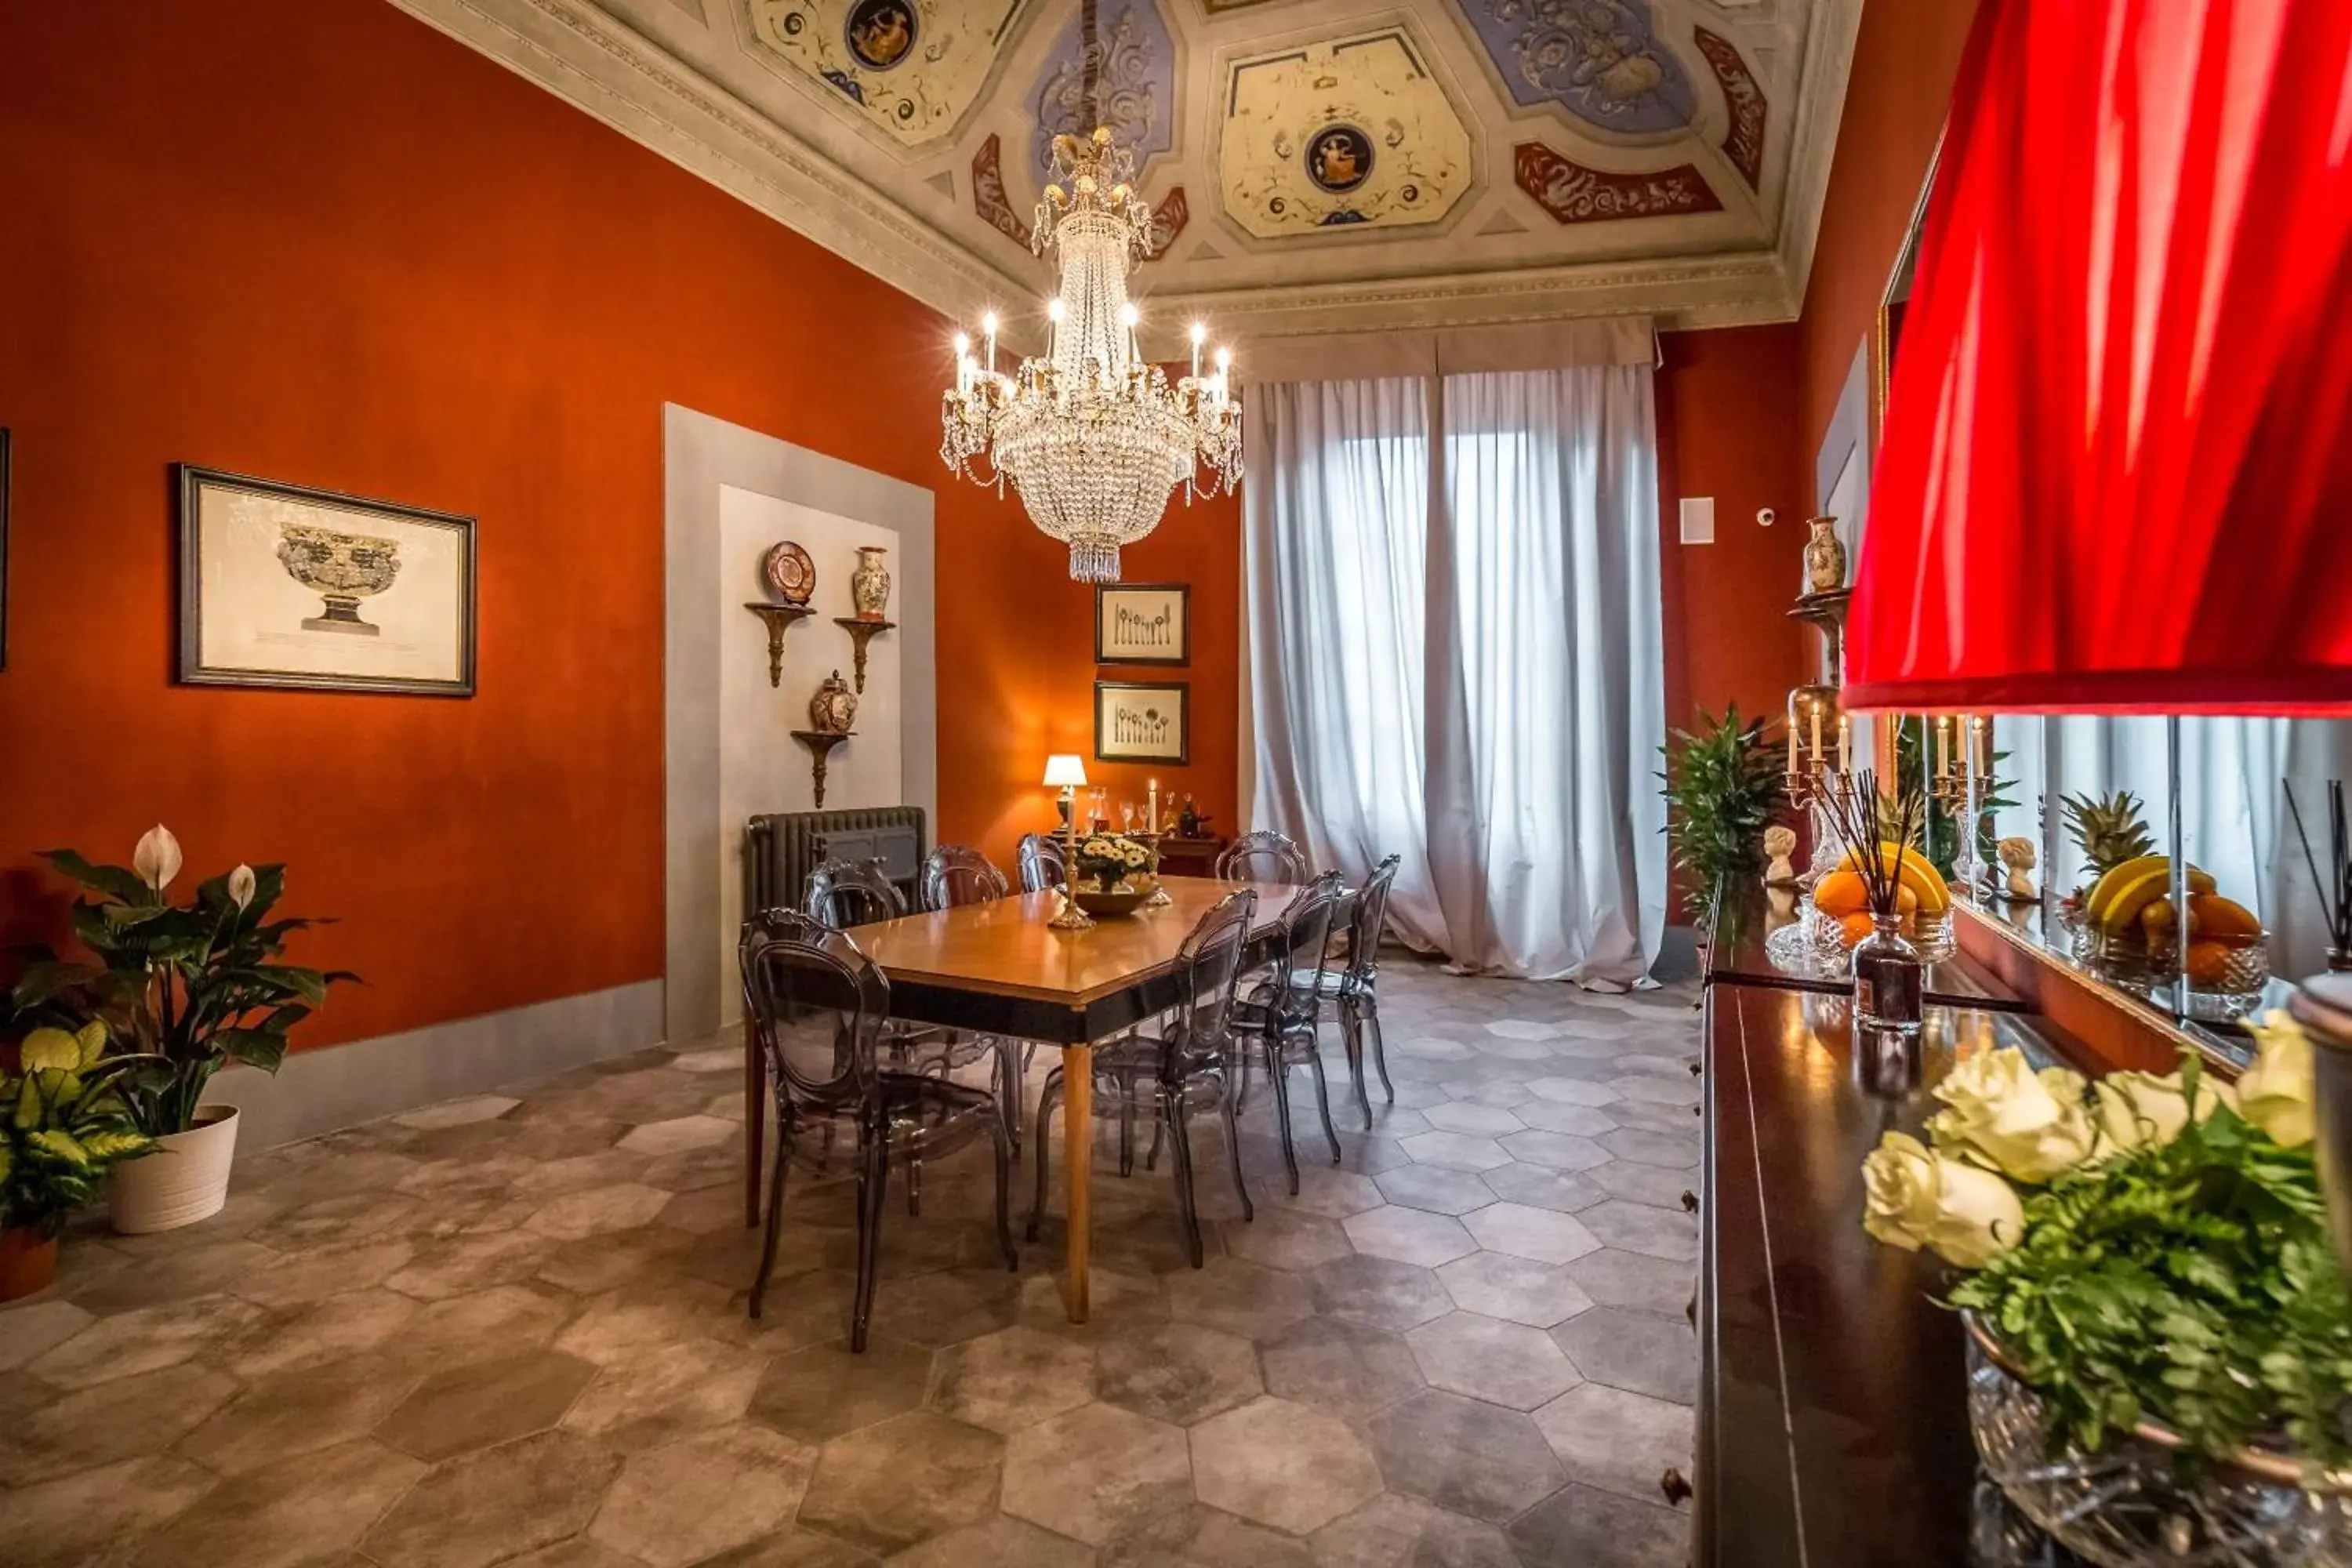 Buffet breakfast, Dining Area in Palazzo Ridolfi - Residenza d'Epoca